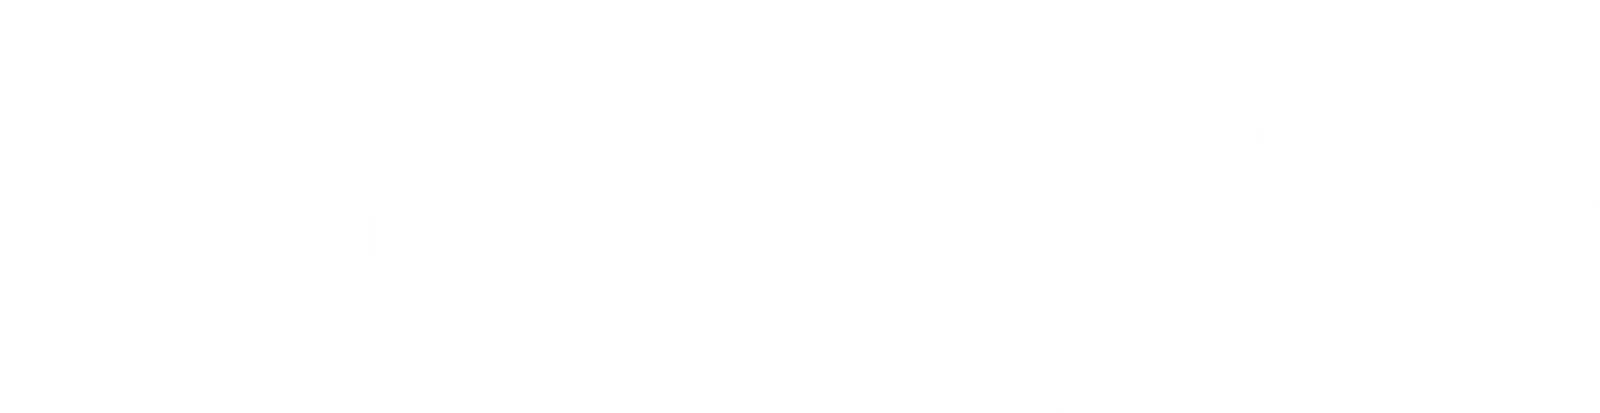 Logo AskBrick24_wit